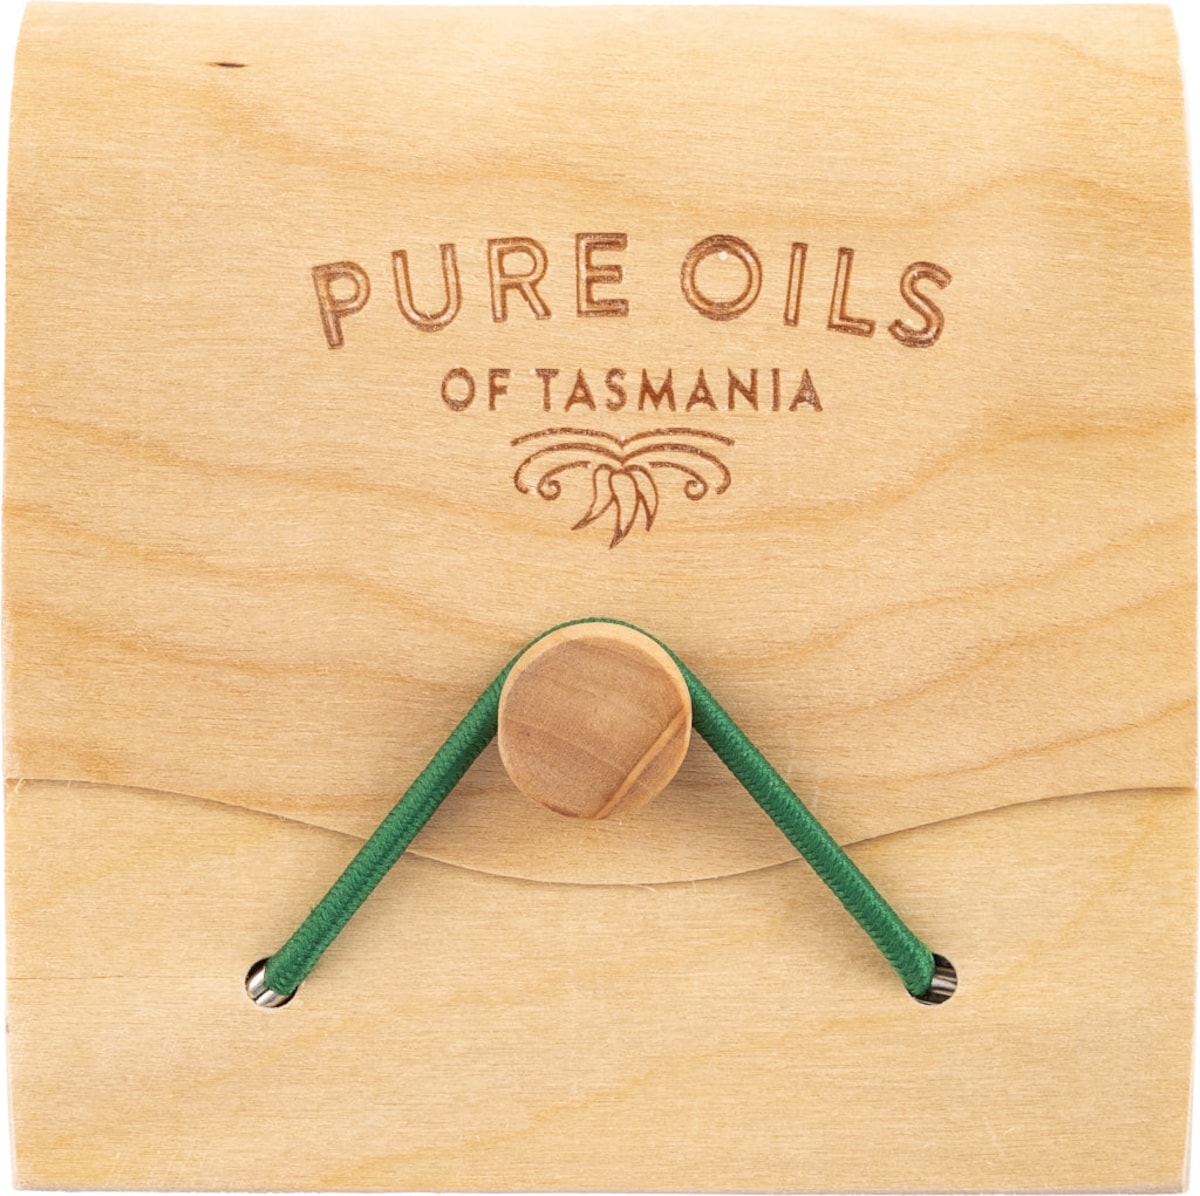 Pure Oils of Tasmania Double Pure Oil Kunzea + Lavender